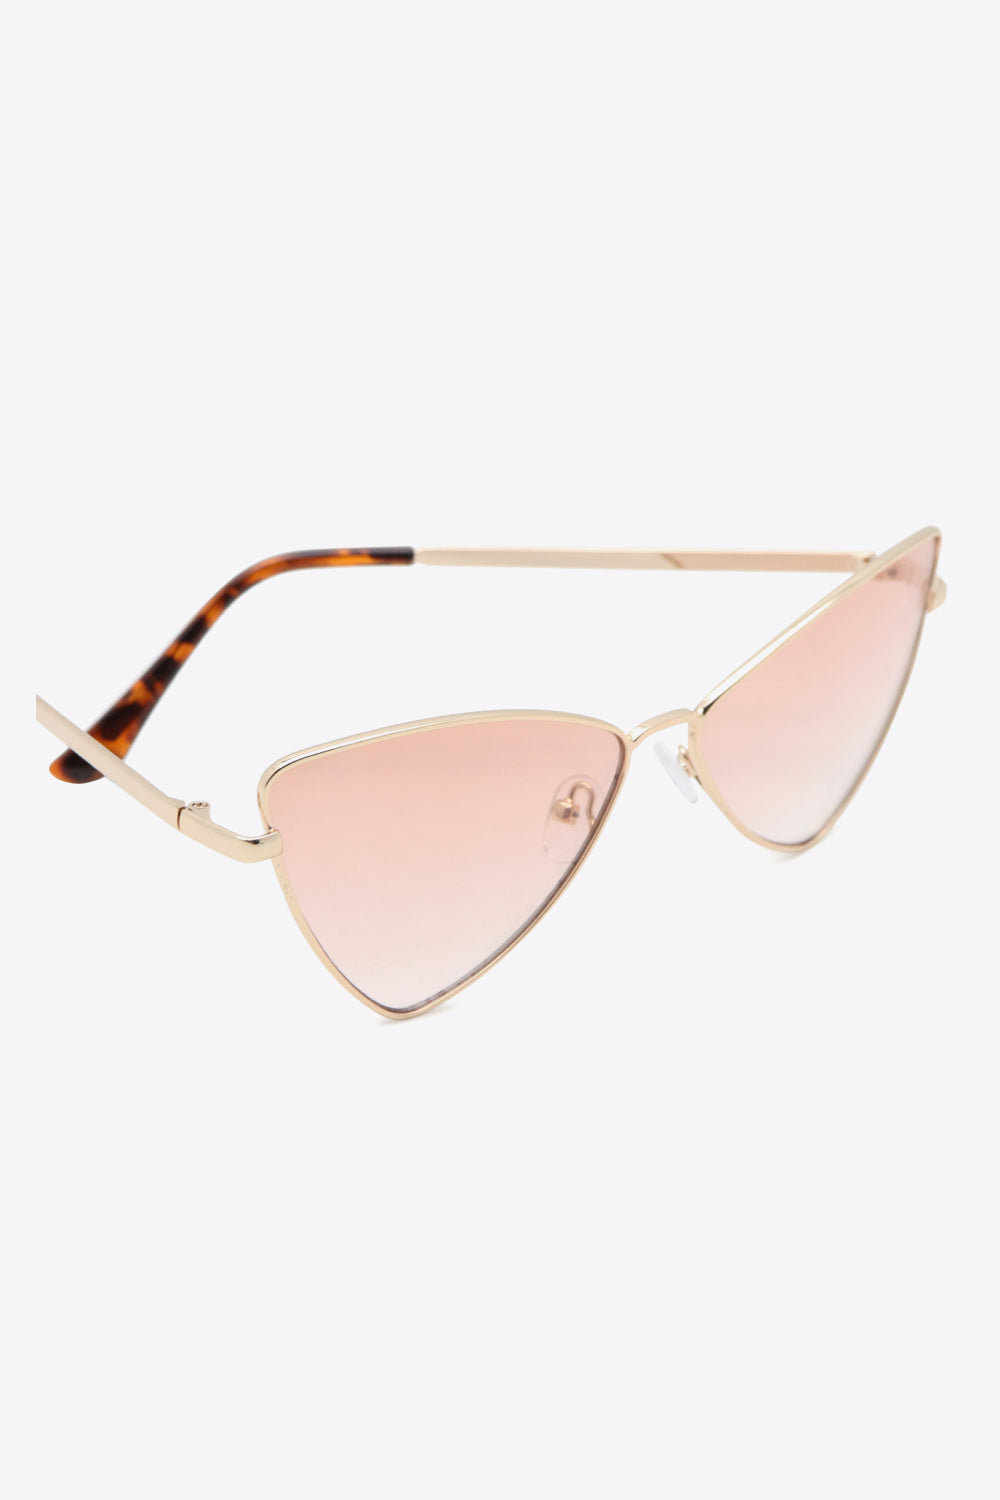 Uylee's Boutique Metal Frame Cat-Eye Sunglasses